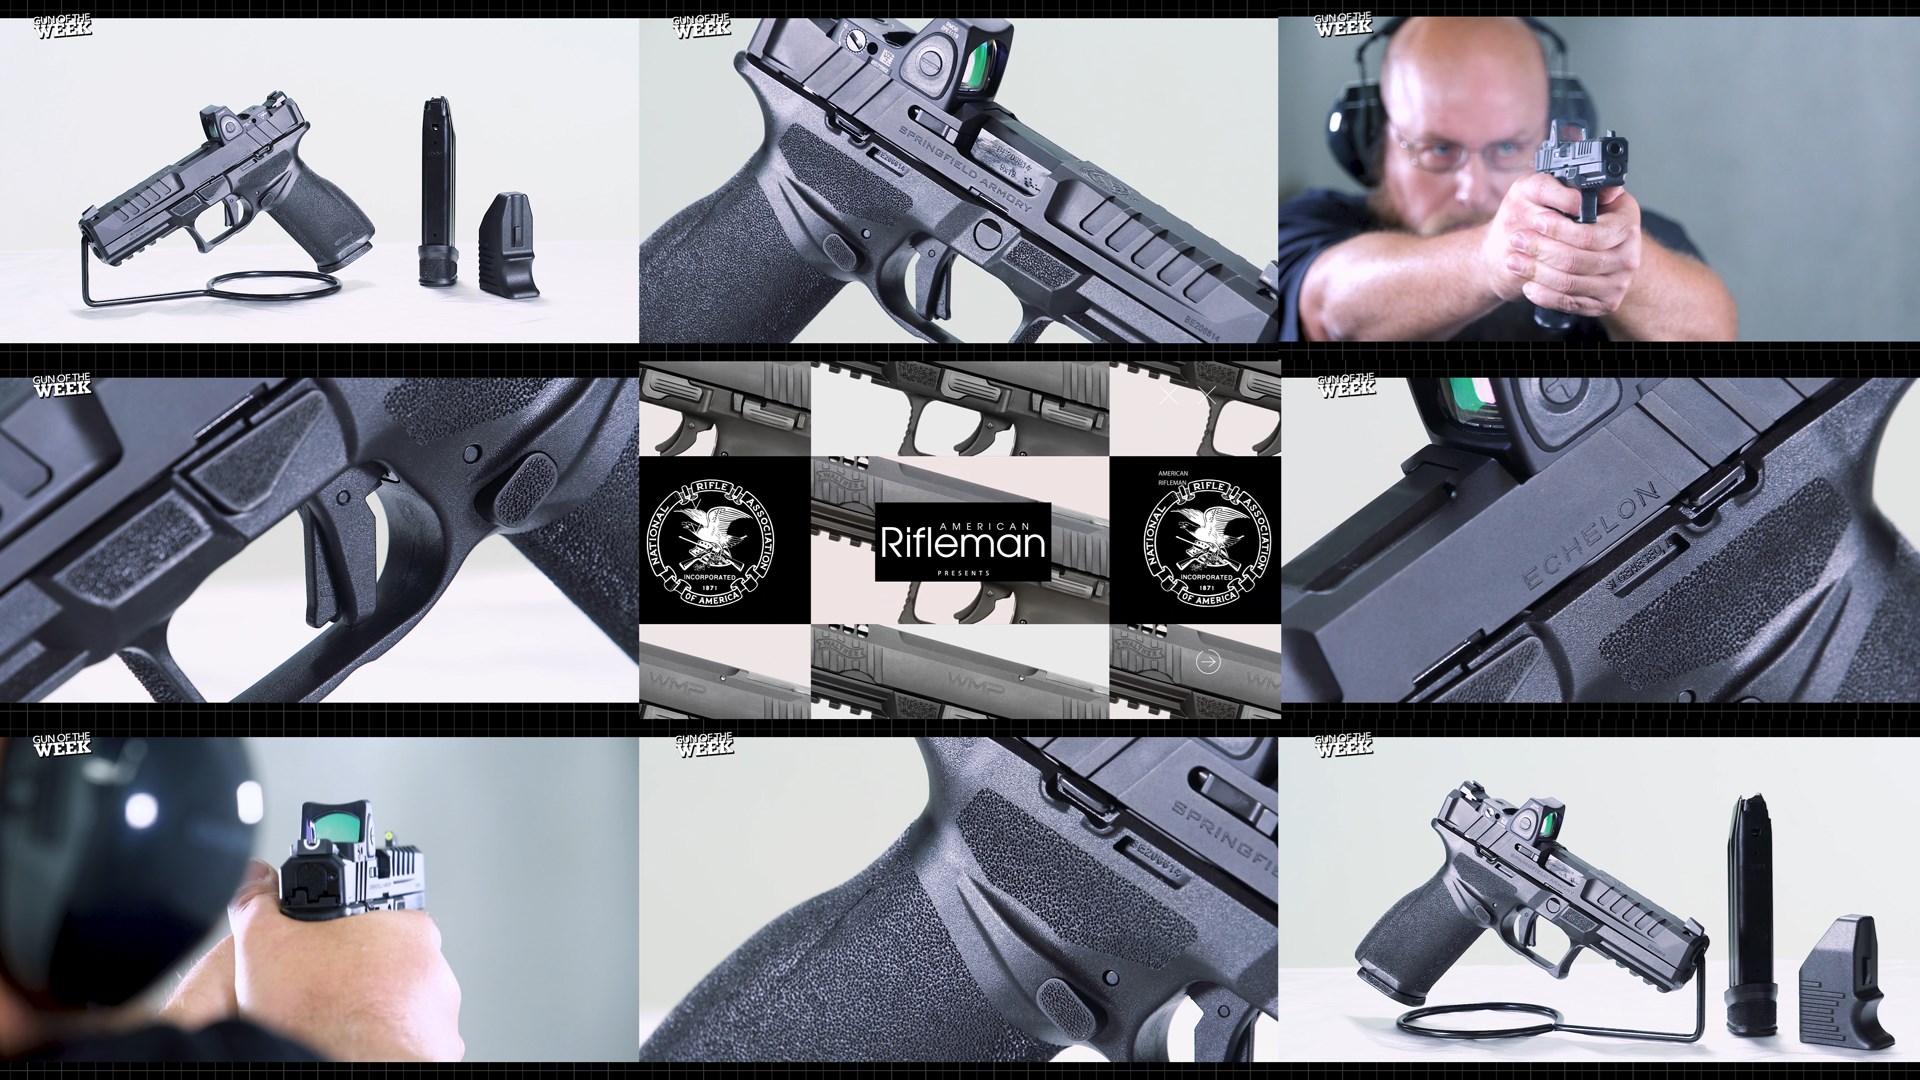 Springfield Armory Echelon pistol shooting range video screenshots tiles mosaic arrangement of images gun man text parts optic closeup details